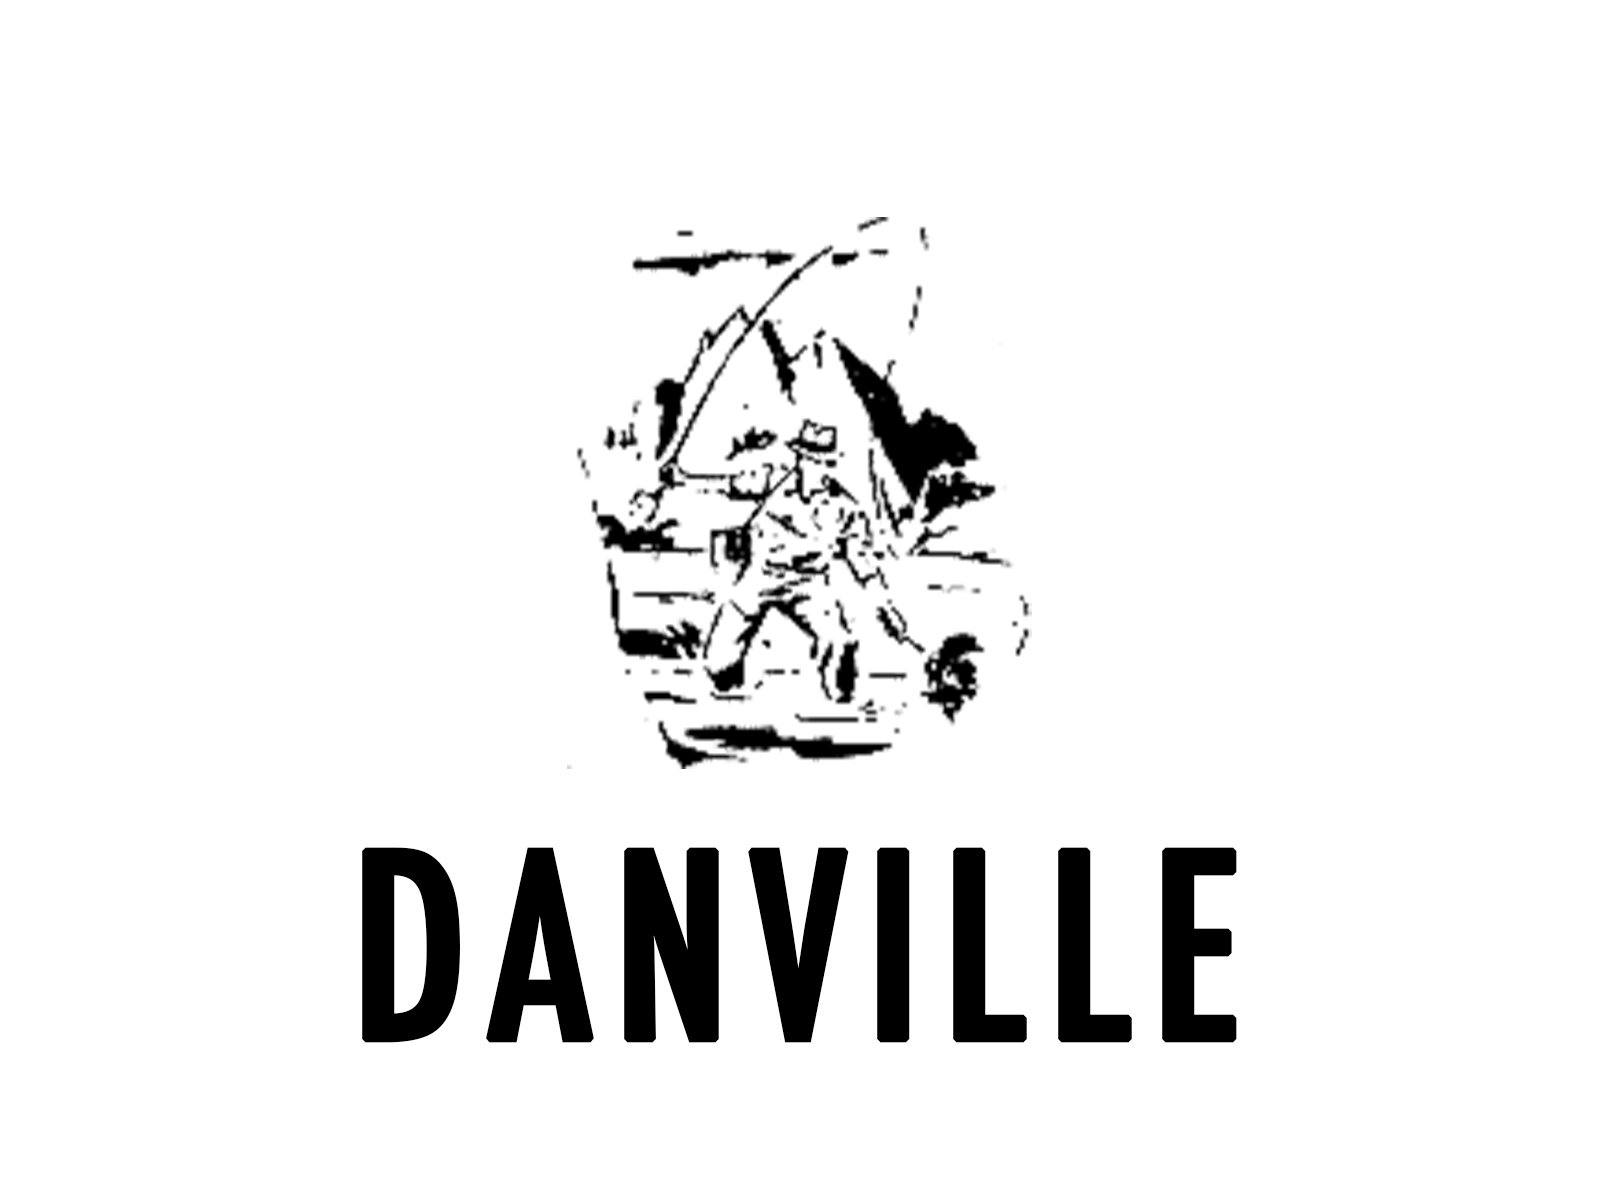 DANVILLE